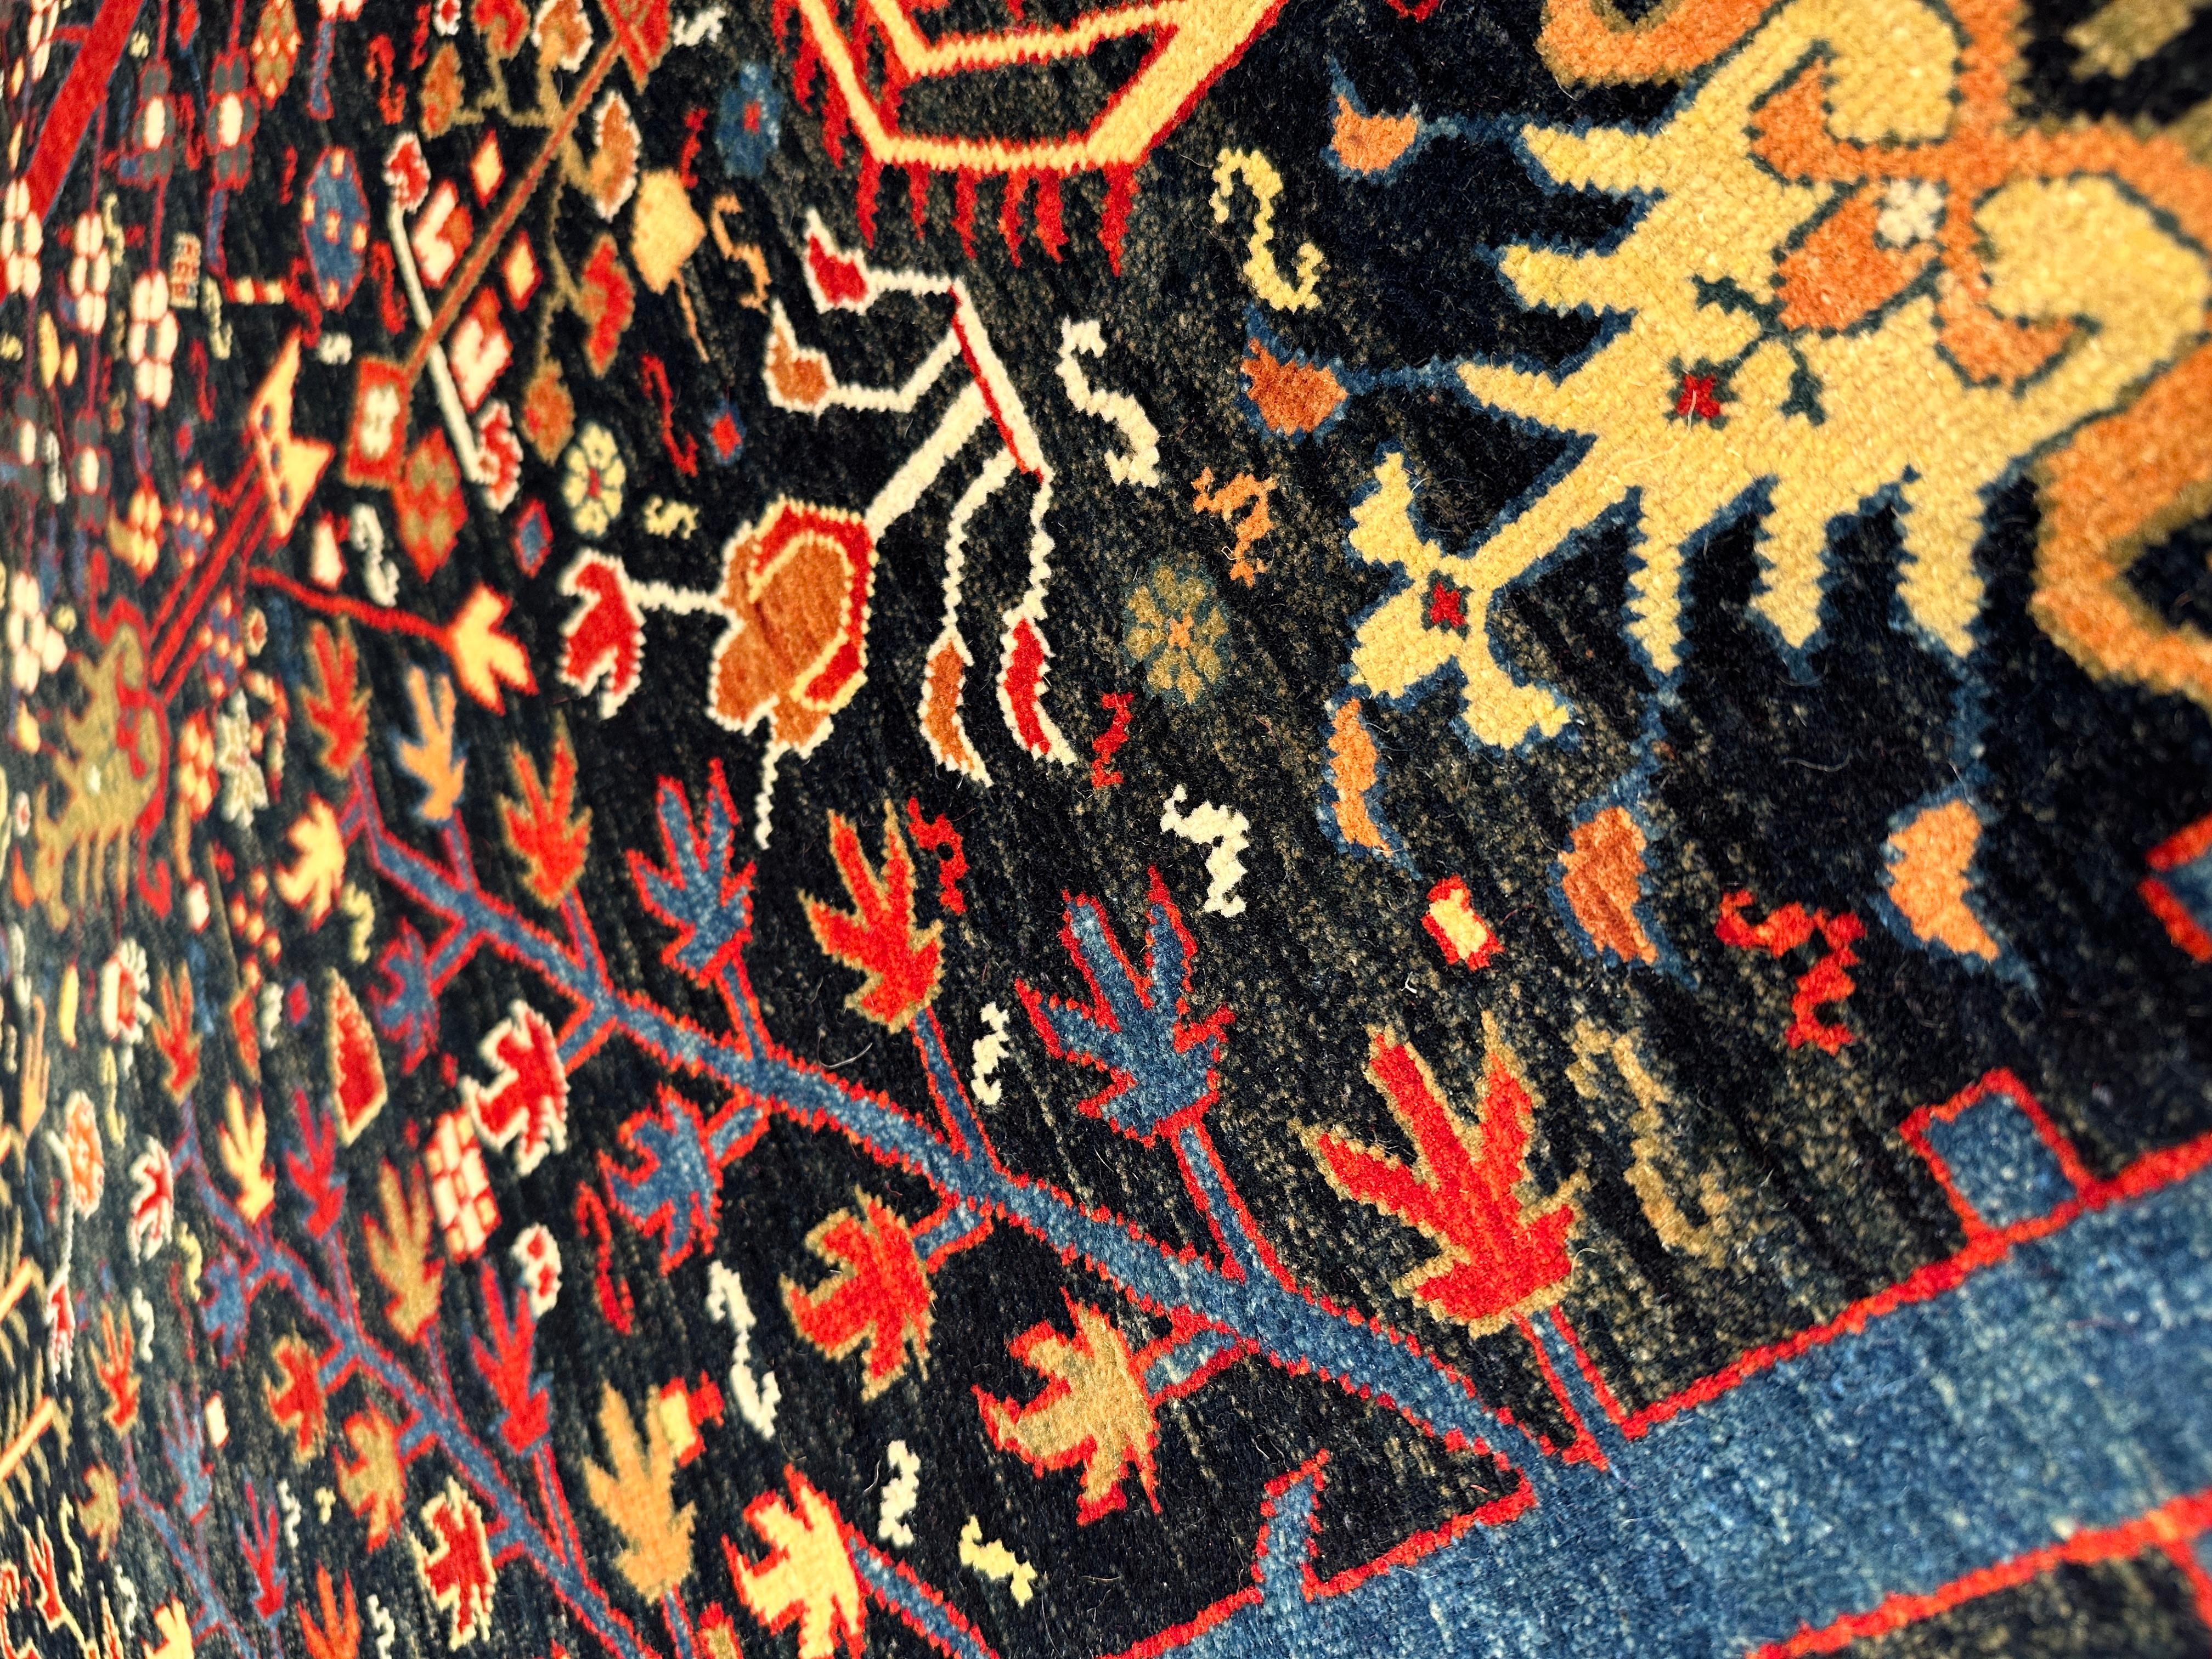 Turkish Ararat Rugs Bid Majnum on Blue Field Rug, 17th C Revival Carpet, Natural Dyed For Sale